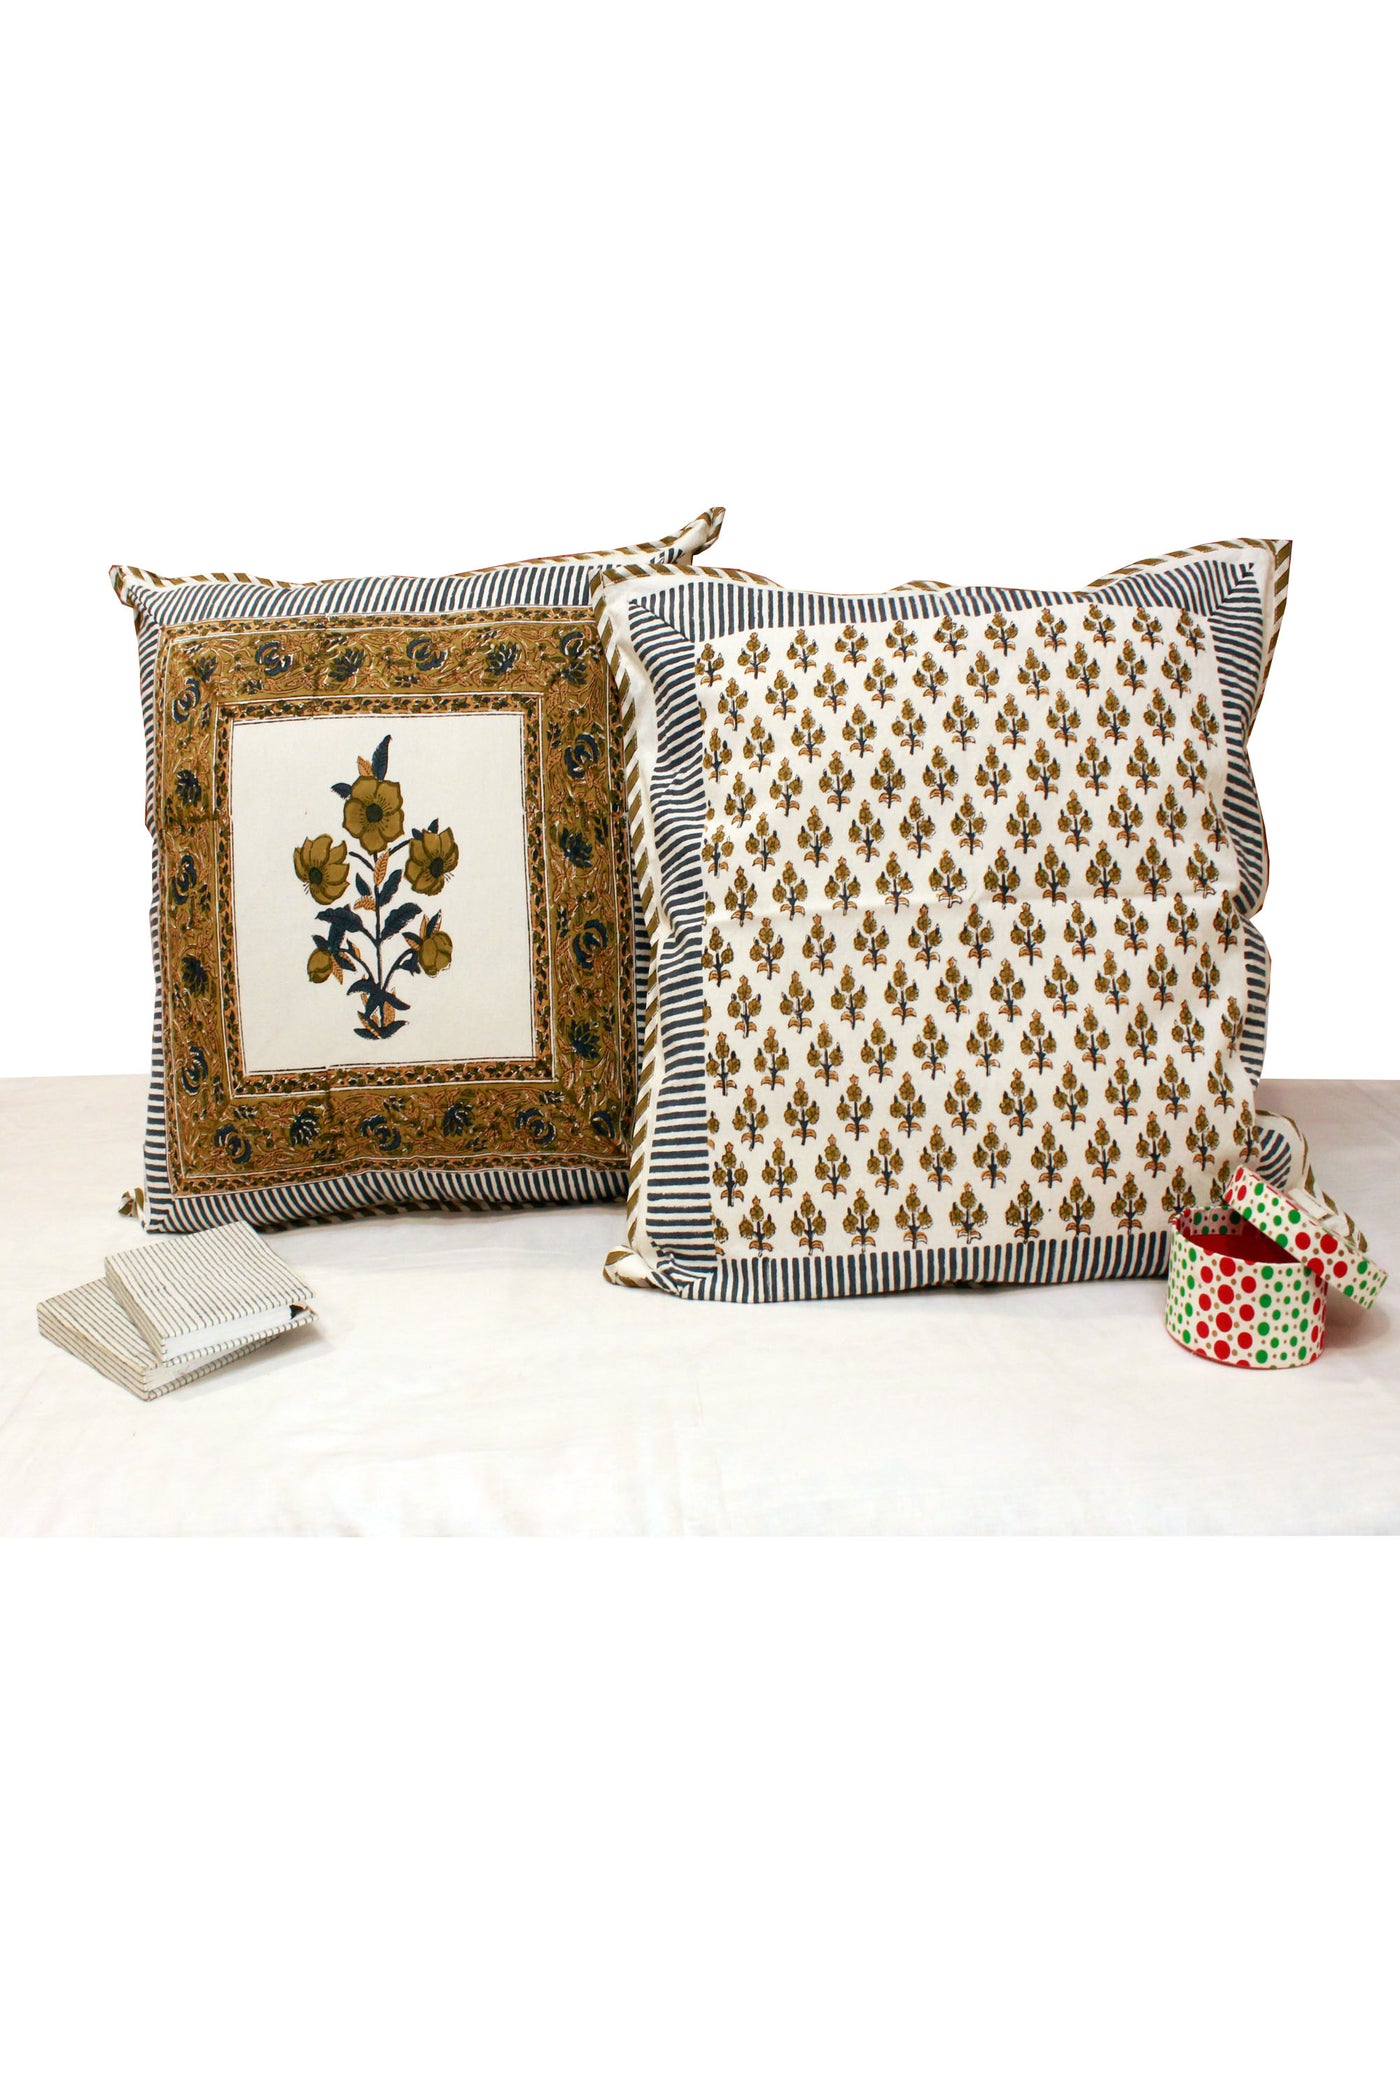 Cotton Mughal Buta Hand Block Print  Cushion Cover in Olive Green